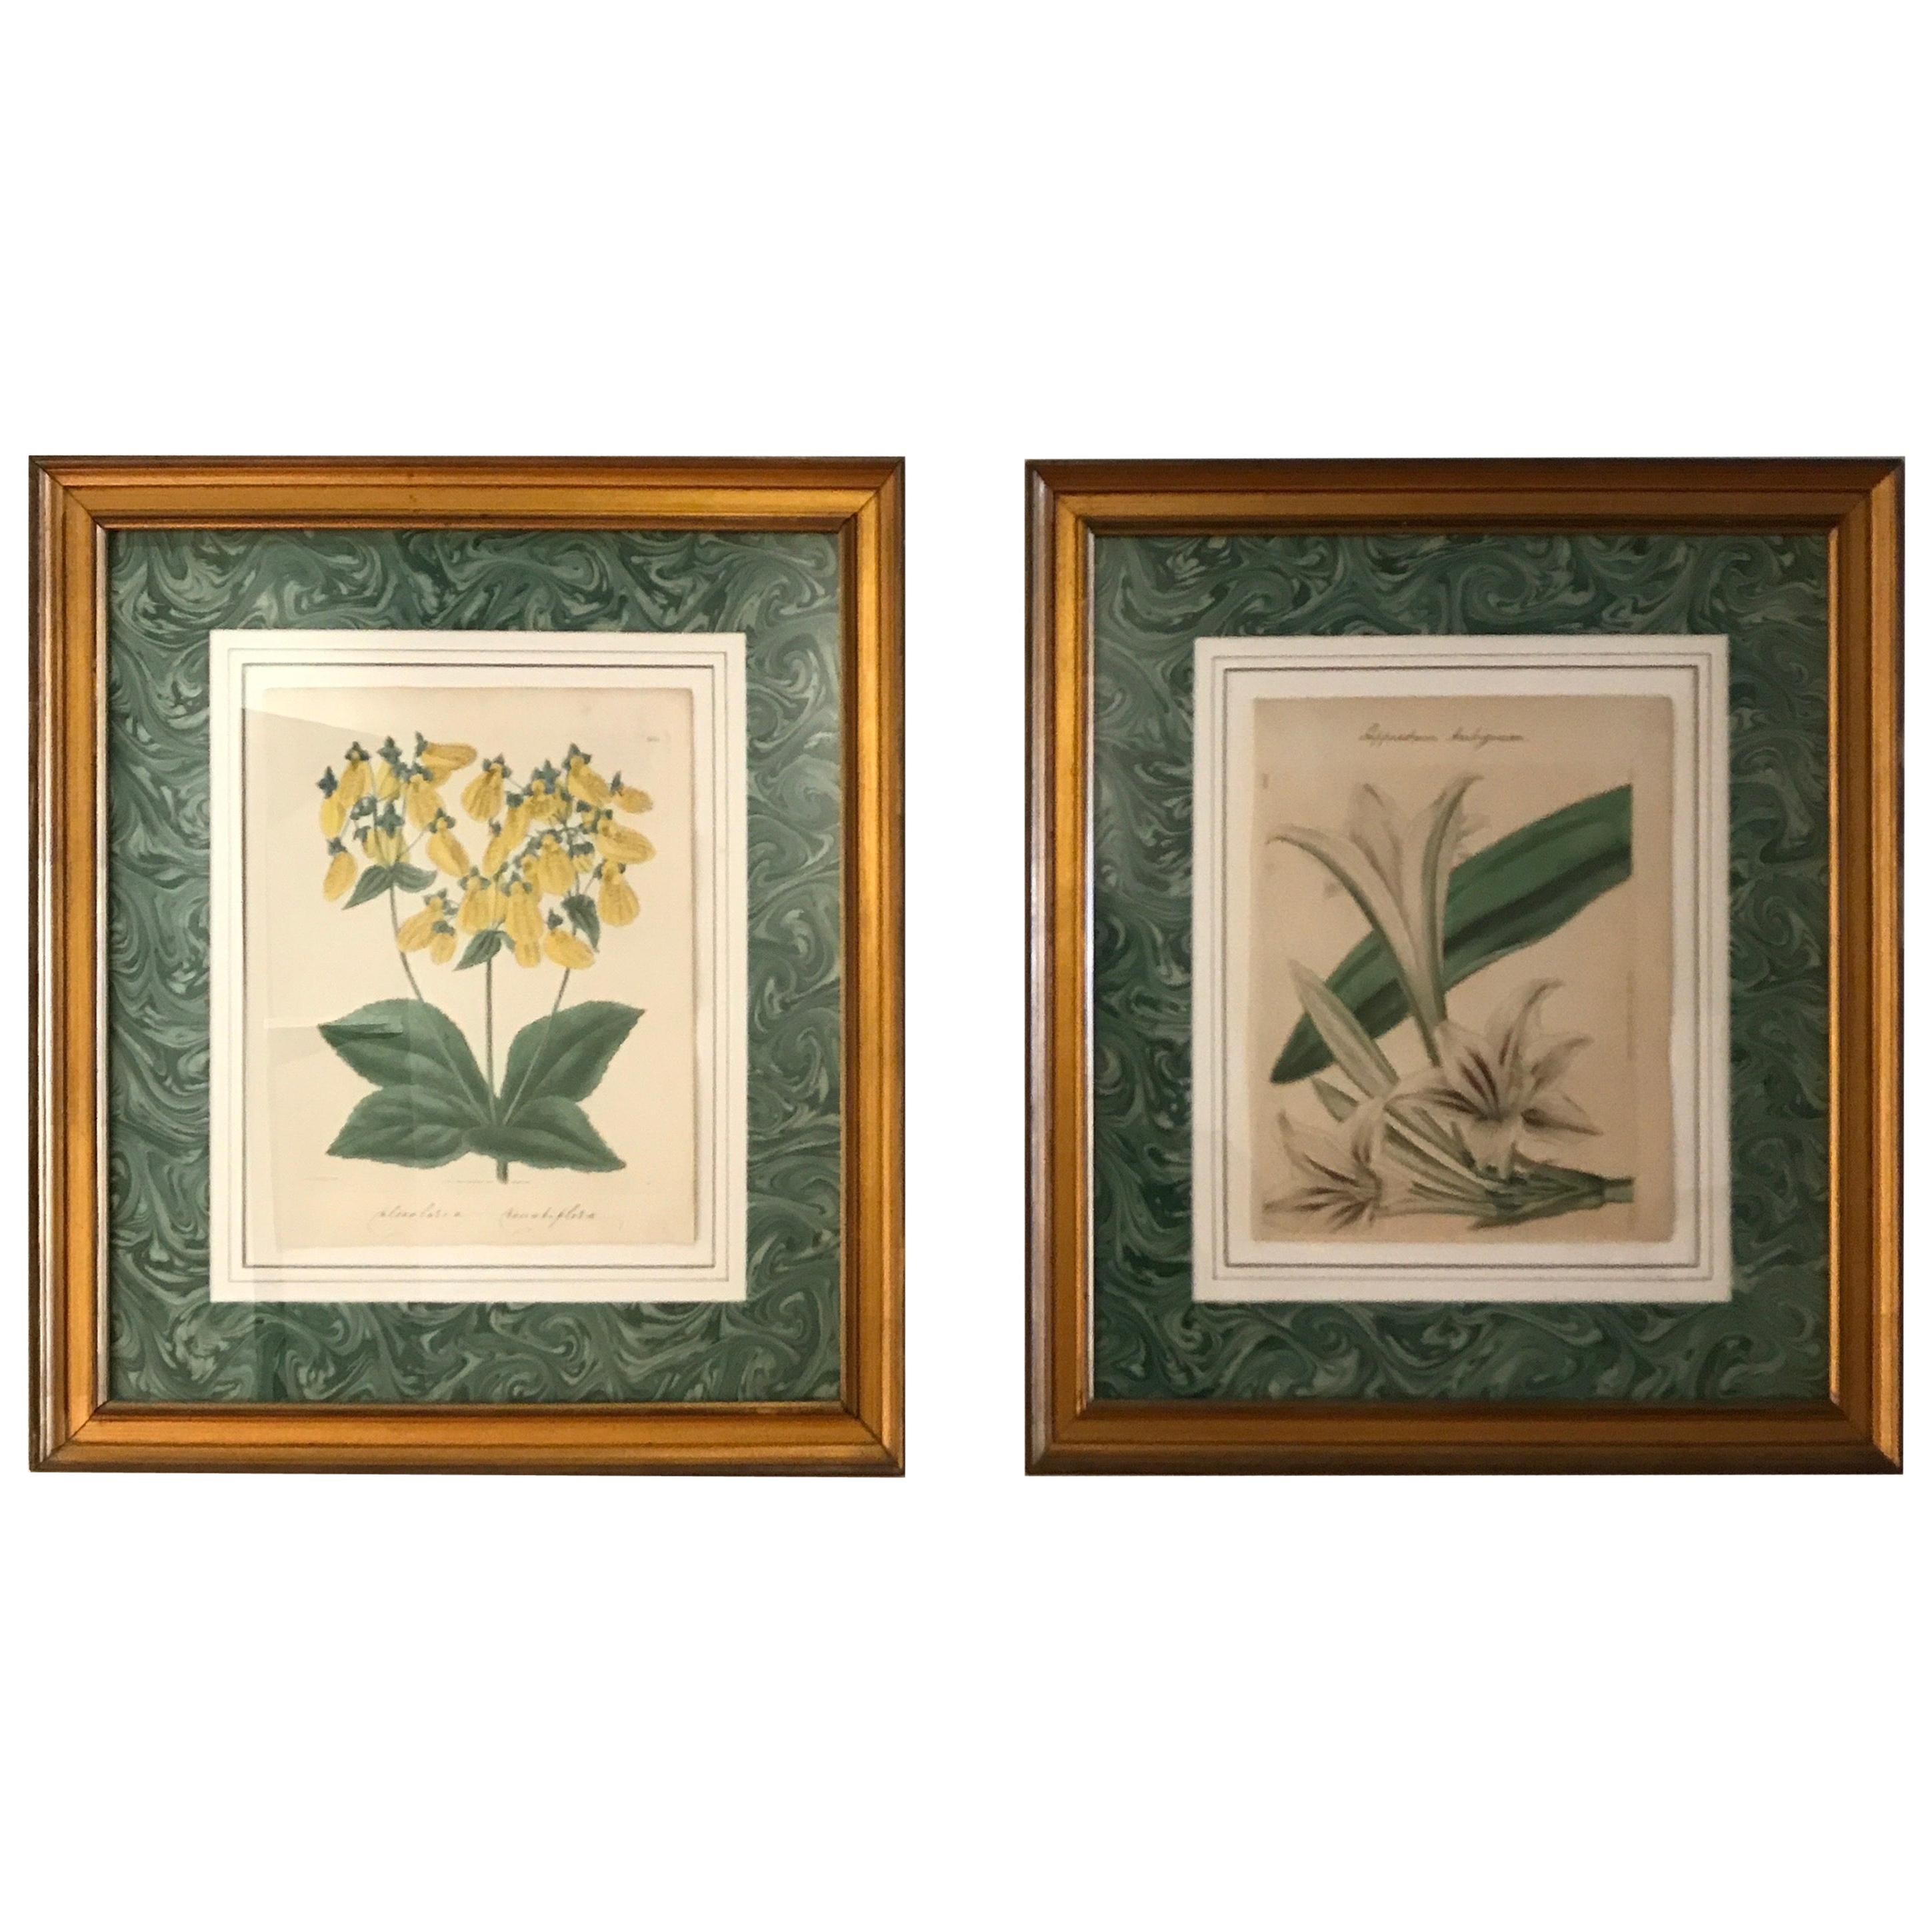 Pair of Original Antique Hand Colored Botanical Engravings